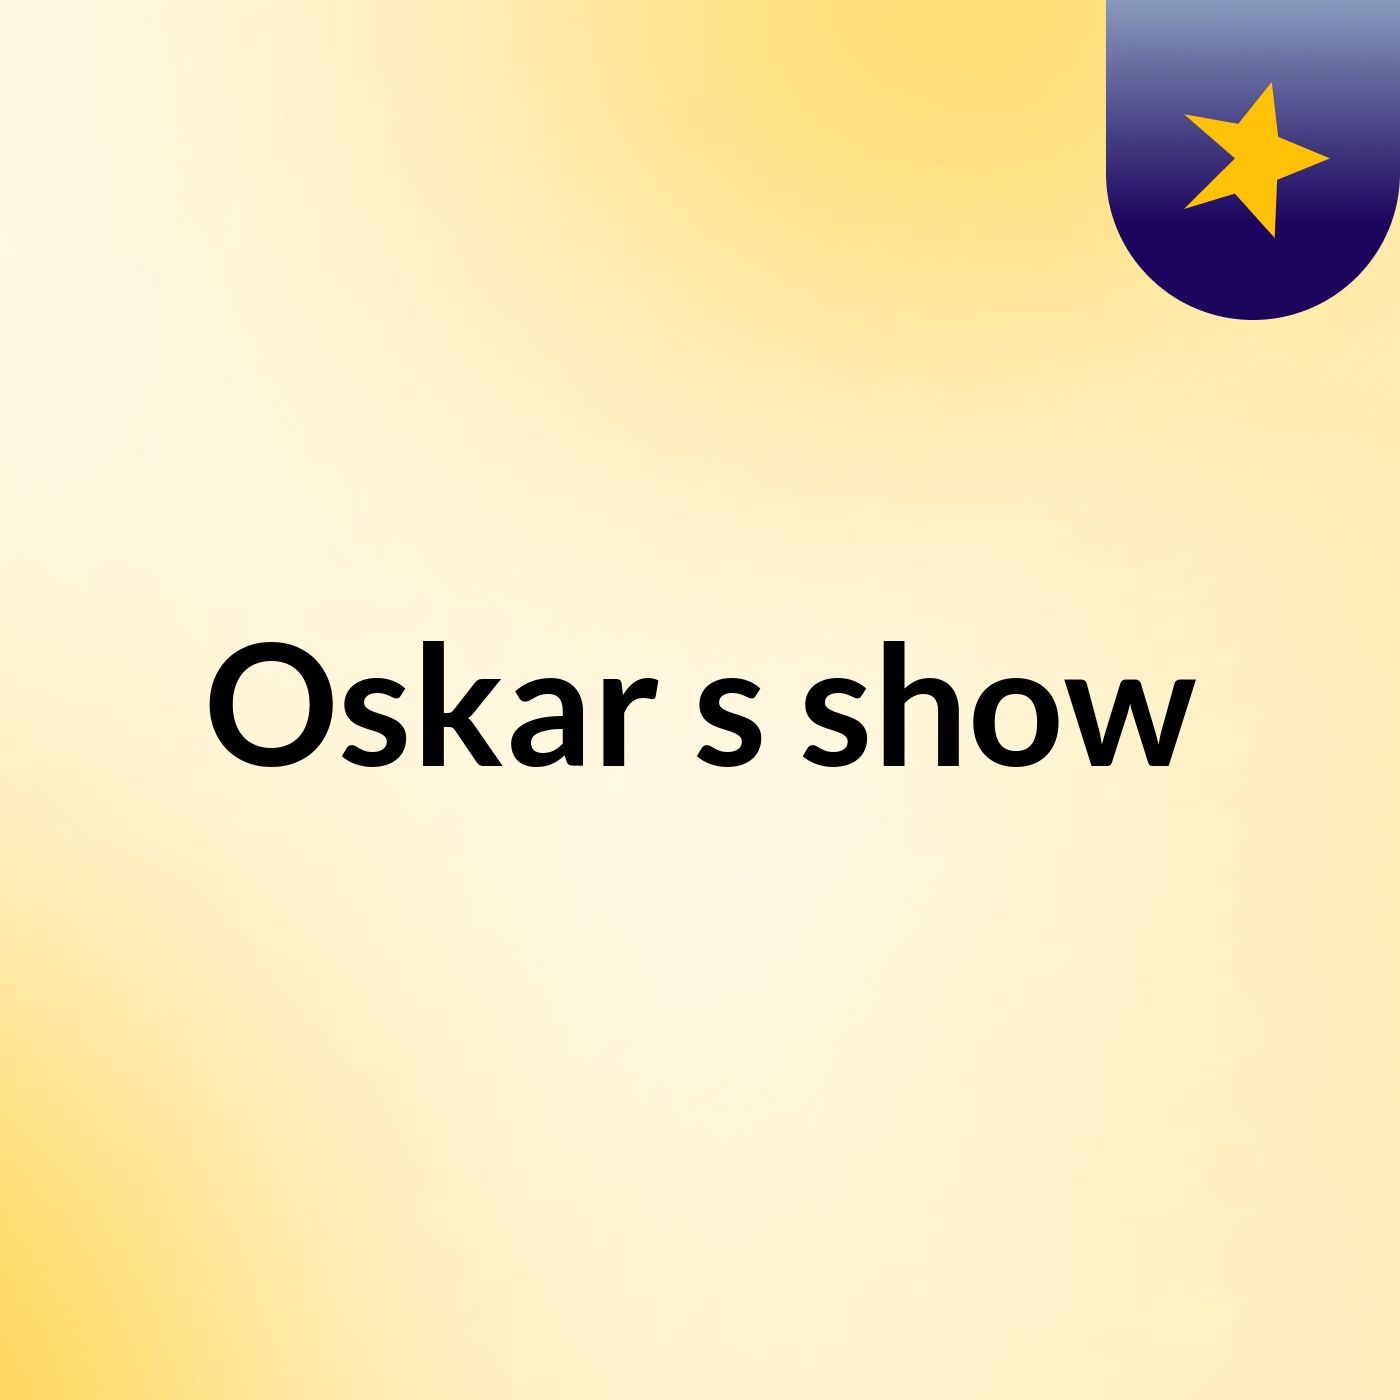 Oskar's show